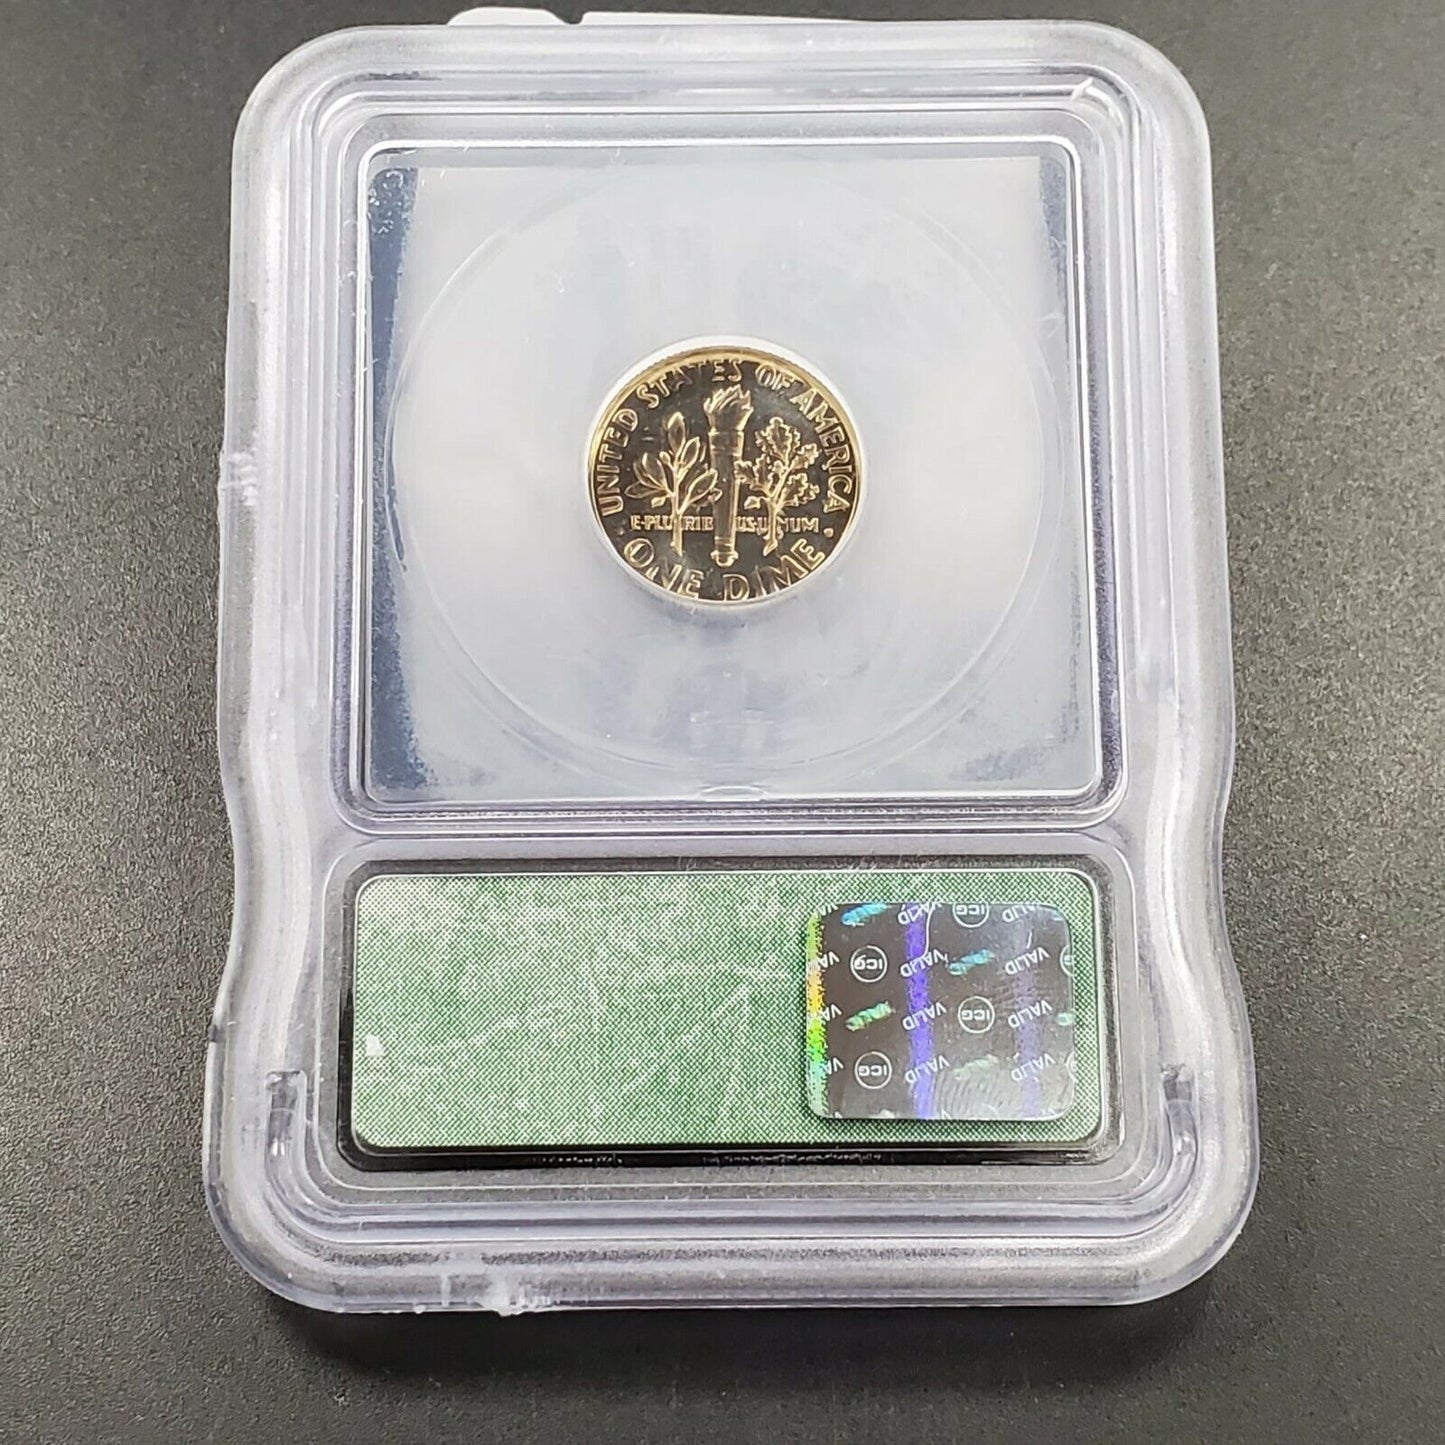 1971 S Roosevelt Clad Dime Proof Coin Vintage ICG PR70 CAM Deep Cameo Gem